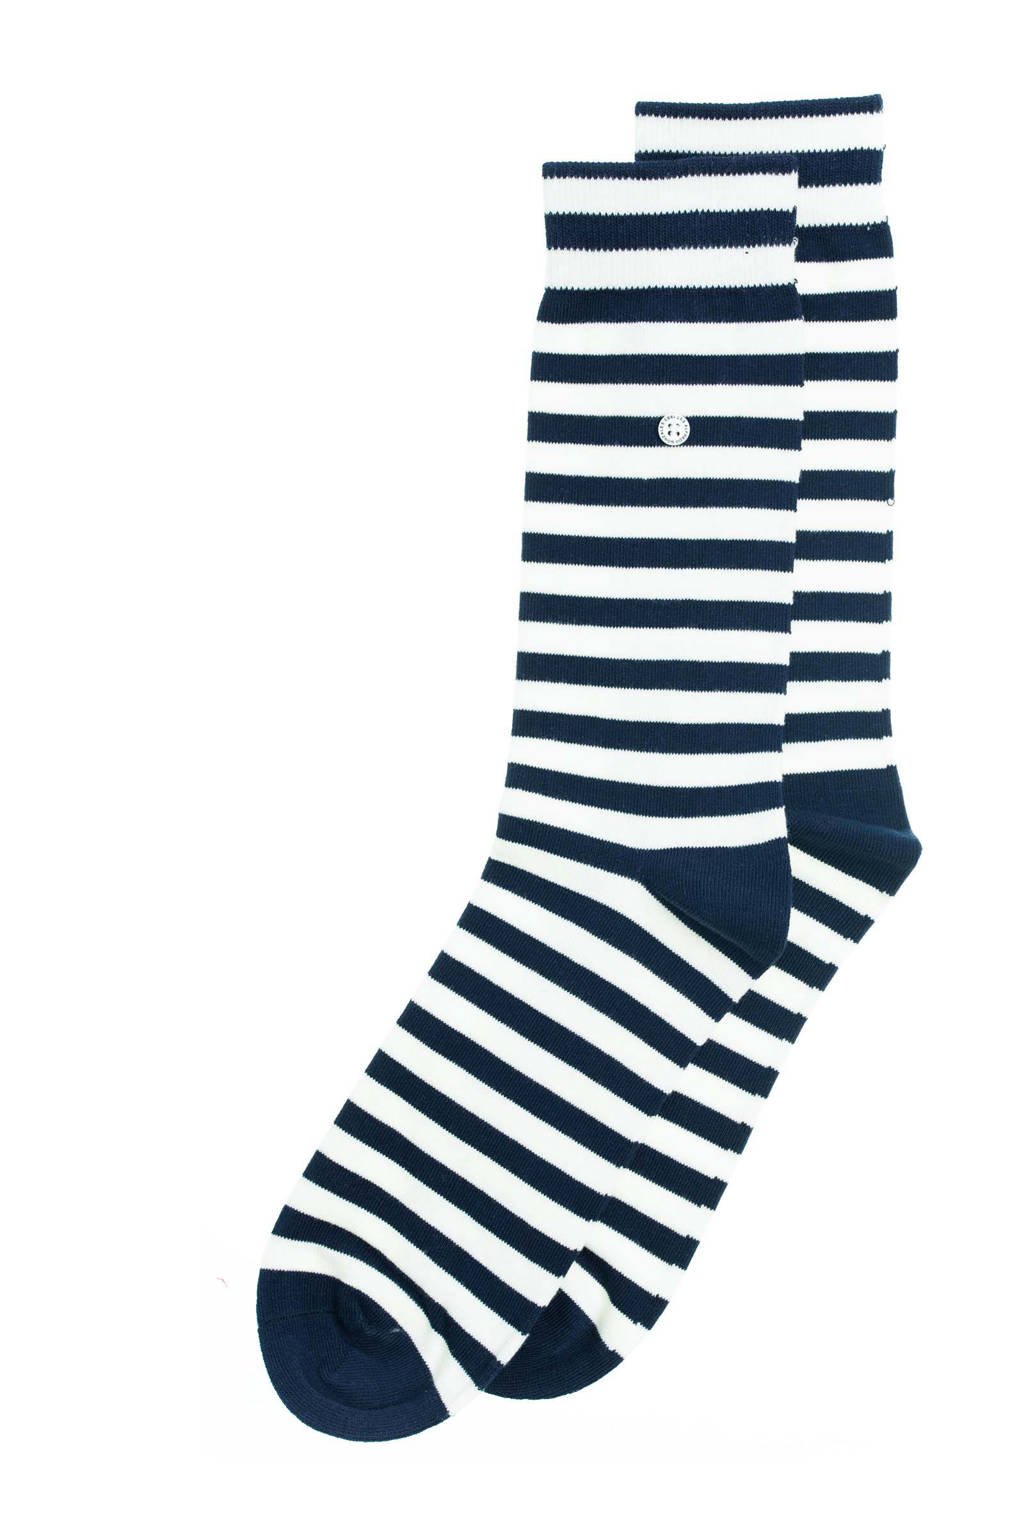 Alfredo Gonzales sokken Harbour Stripes donkerblauw/ecru, Donkerblauw/ecru